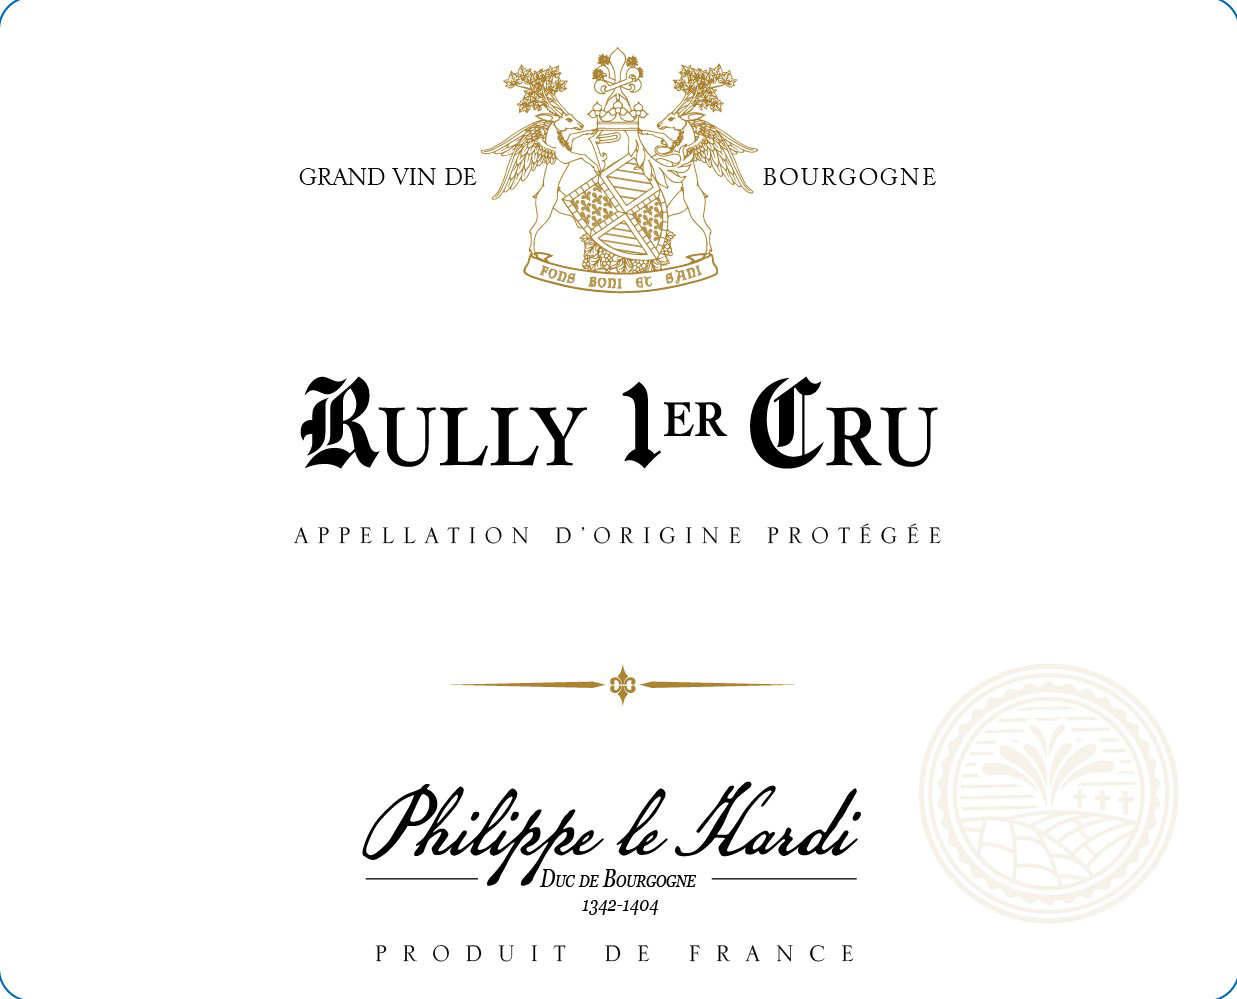 Philippe le Hardi - Rully 1er Cru label